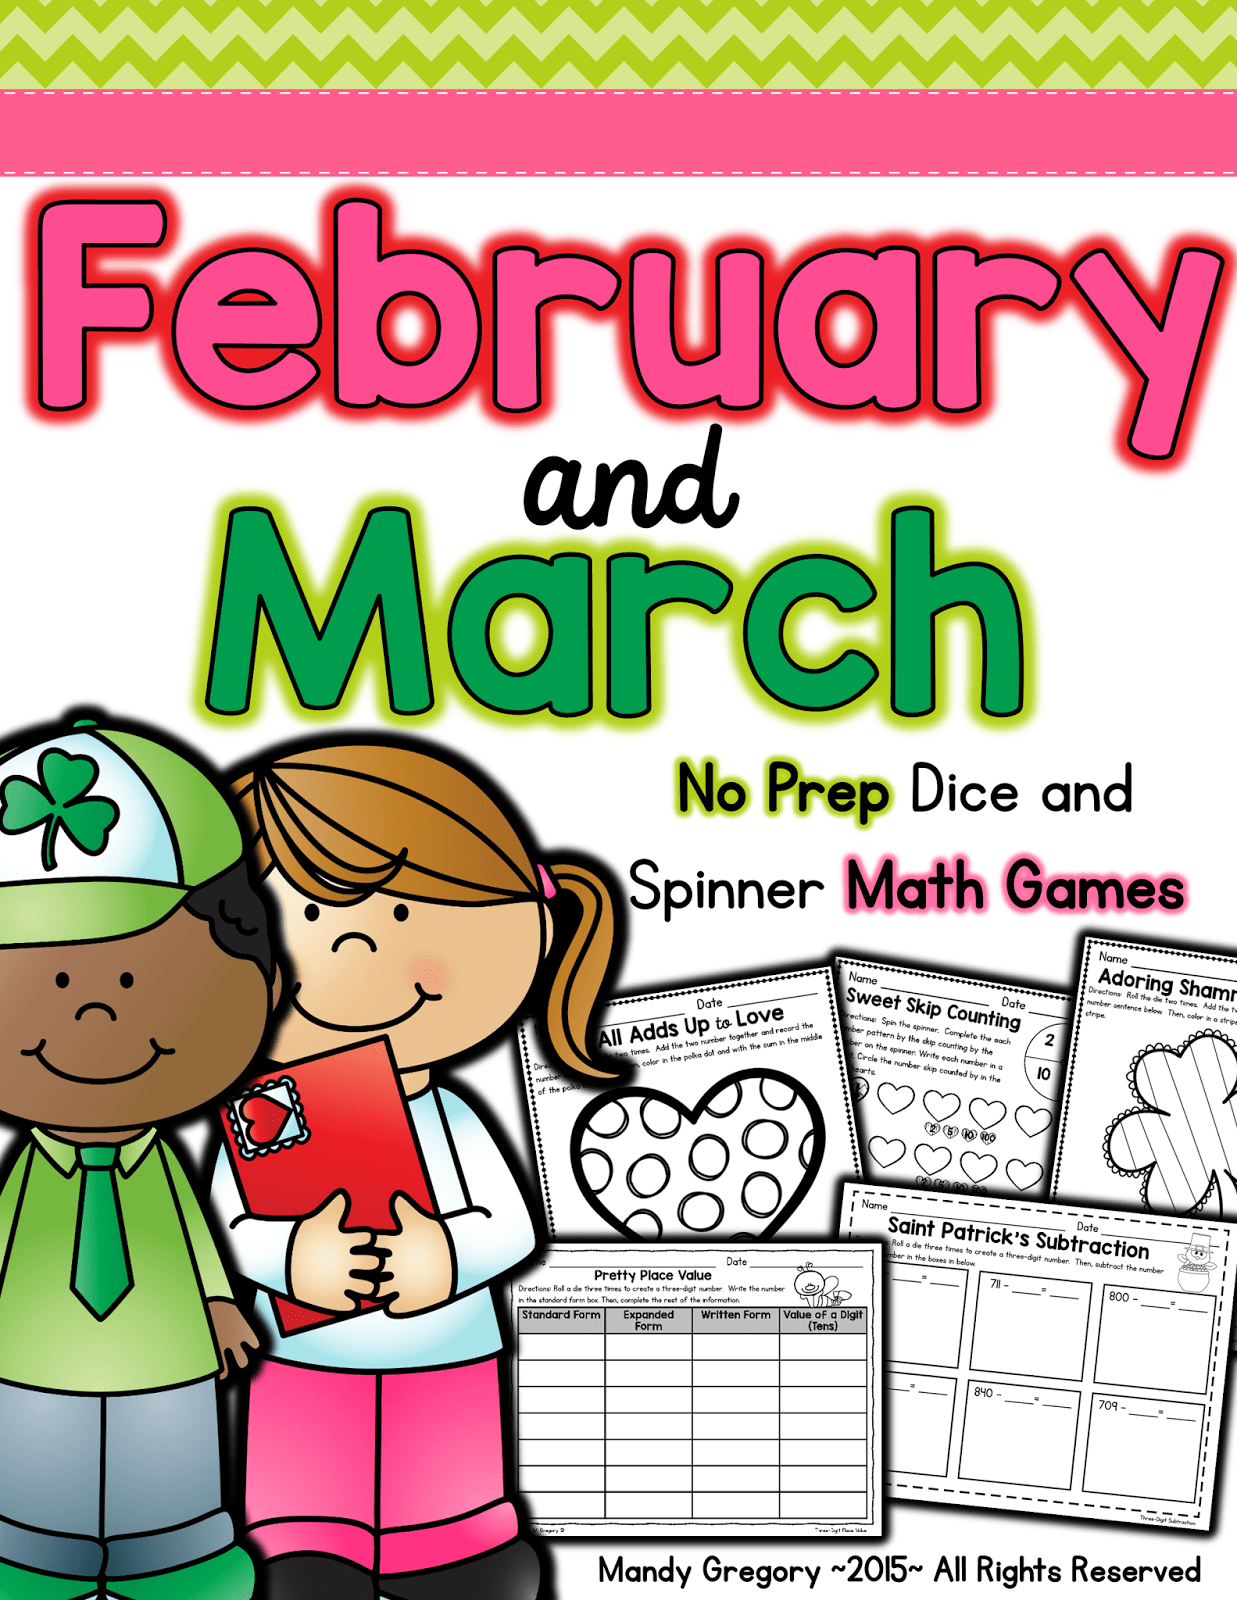 https://www.teacherspayteachers.com/Product/Easy-Prep-Math-Games-February-and-March-1697710